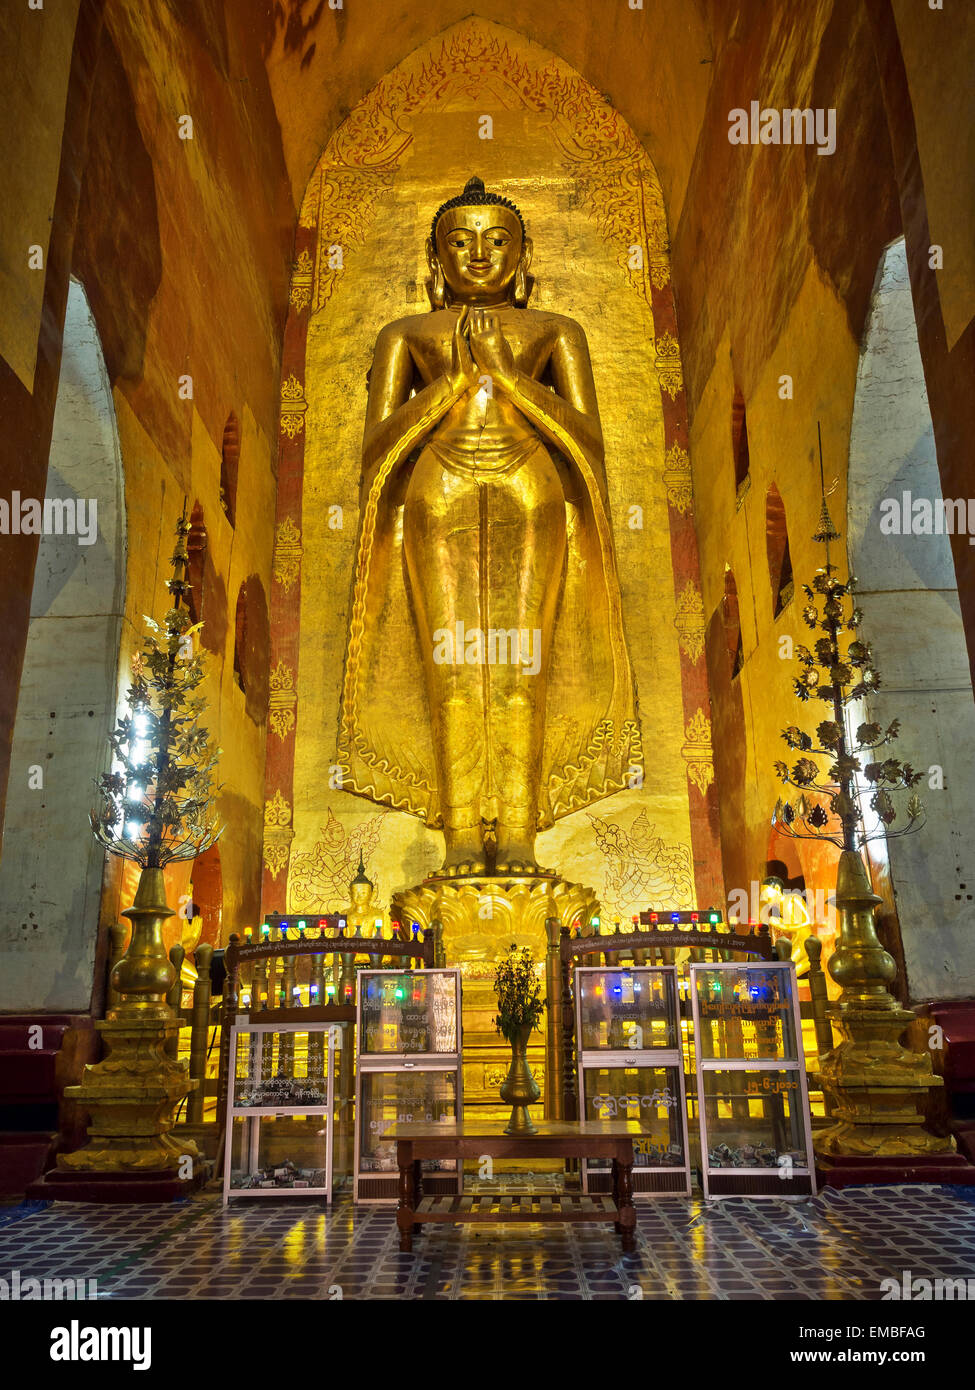 Venerata statua di Budda statua in antico tempio di Ananda in Bagan, Myanmar (Birmania). Foto Stock